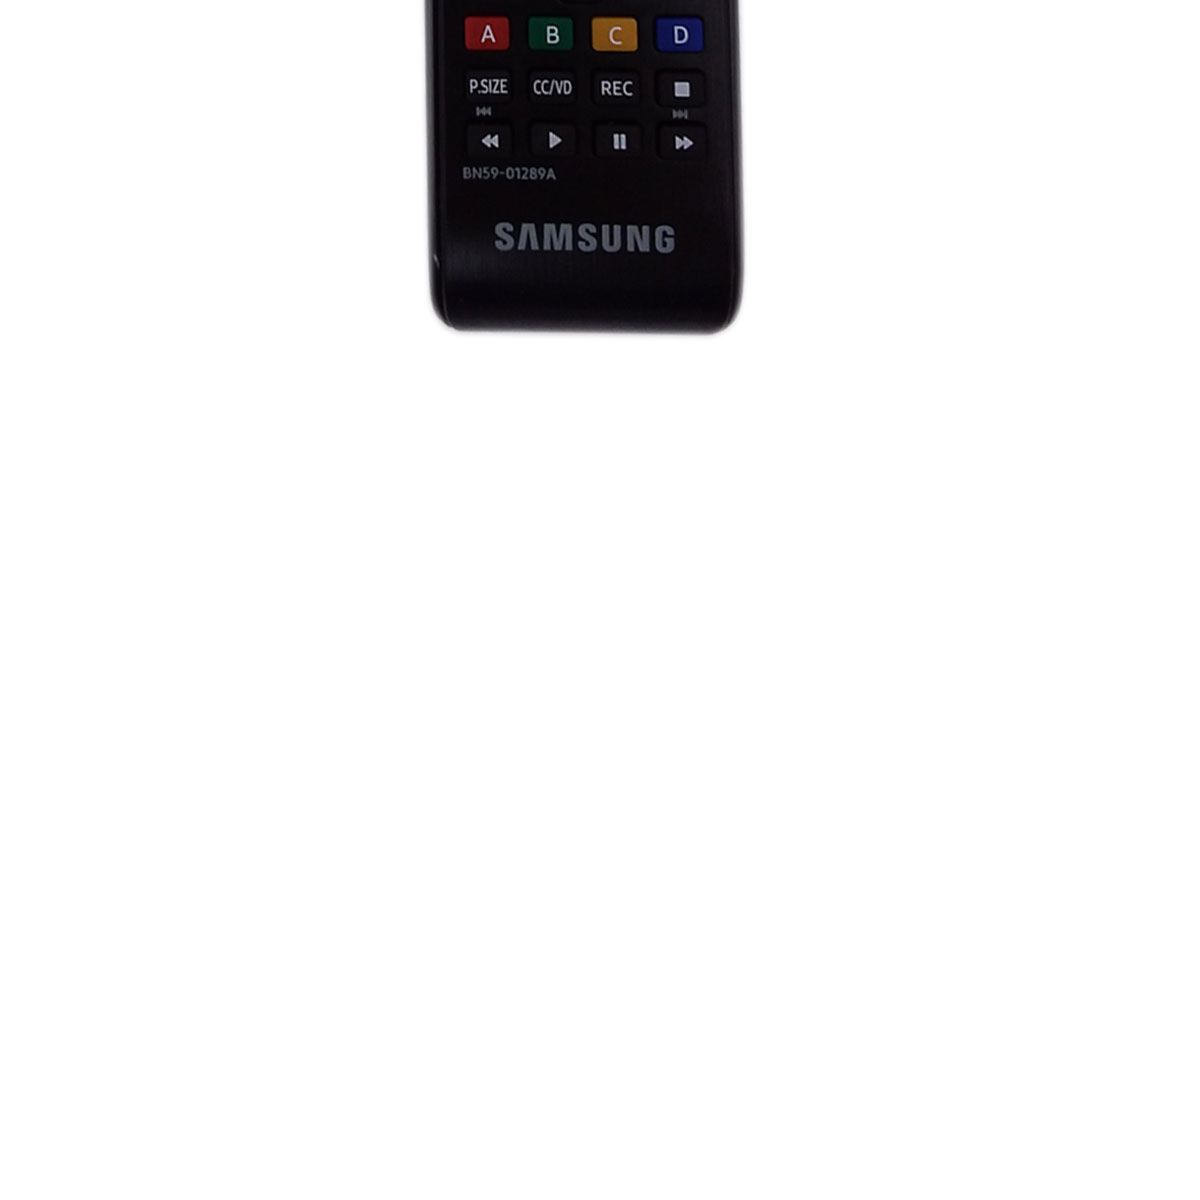 Samsung Original TV Remote Control for Samsung UN65RU7100FXZA Television